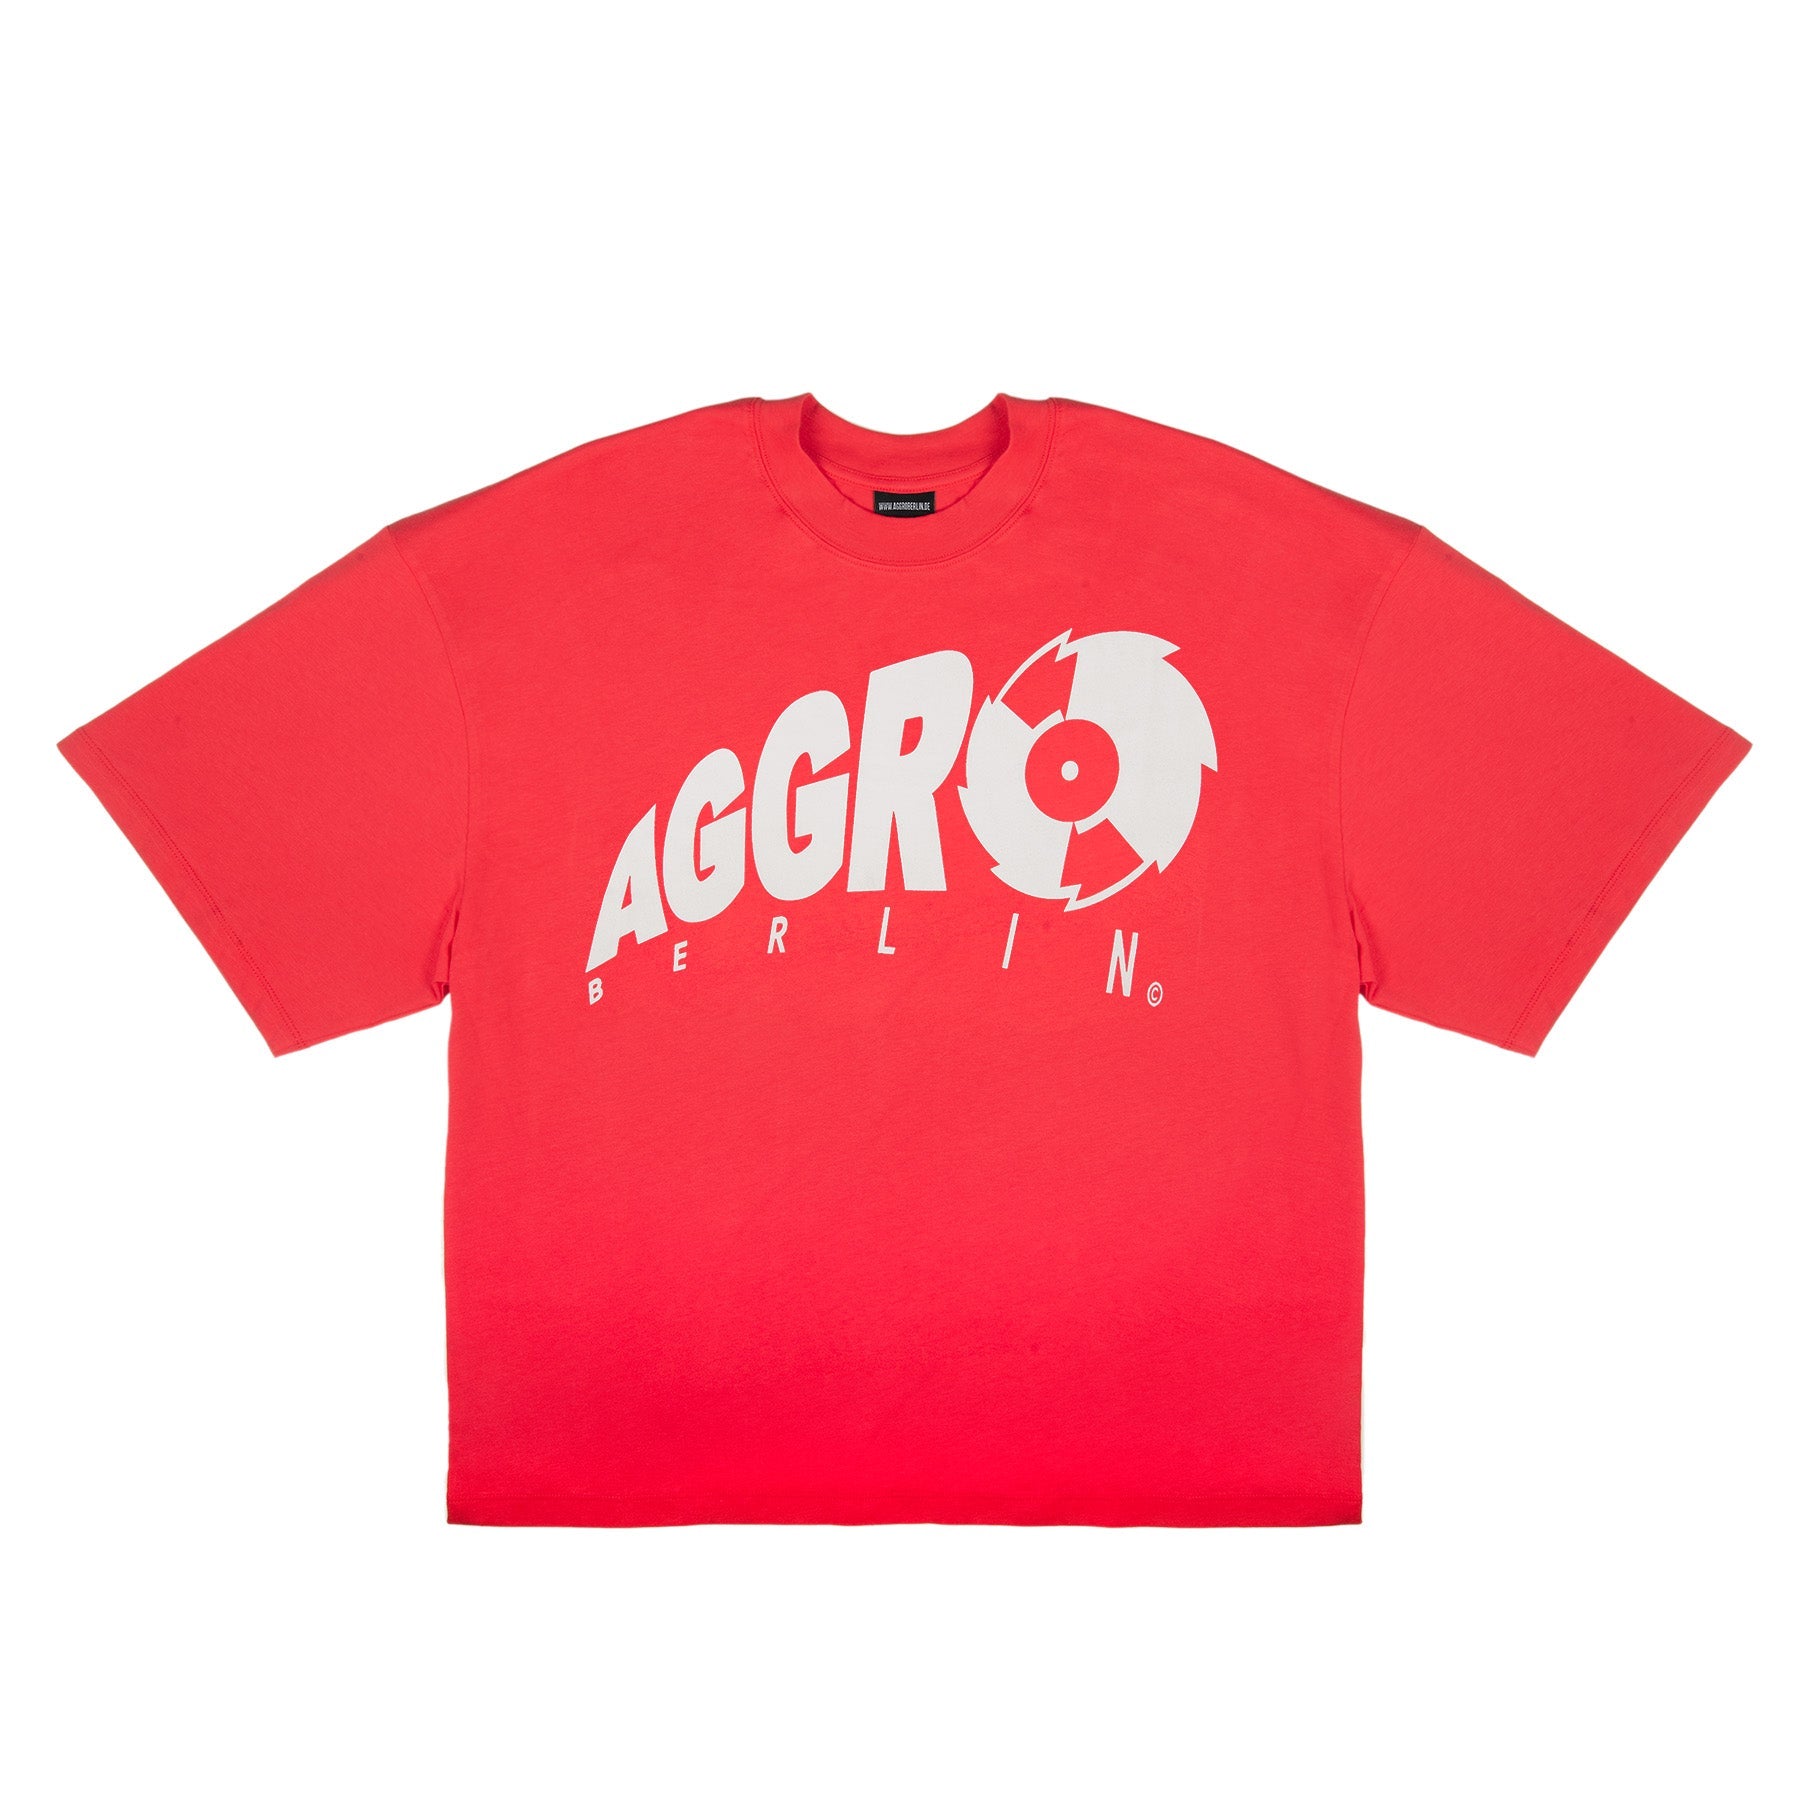 AGGRO Berlin T-Shirt Rot-Weiß